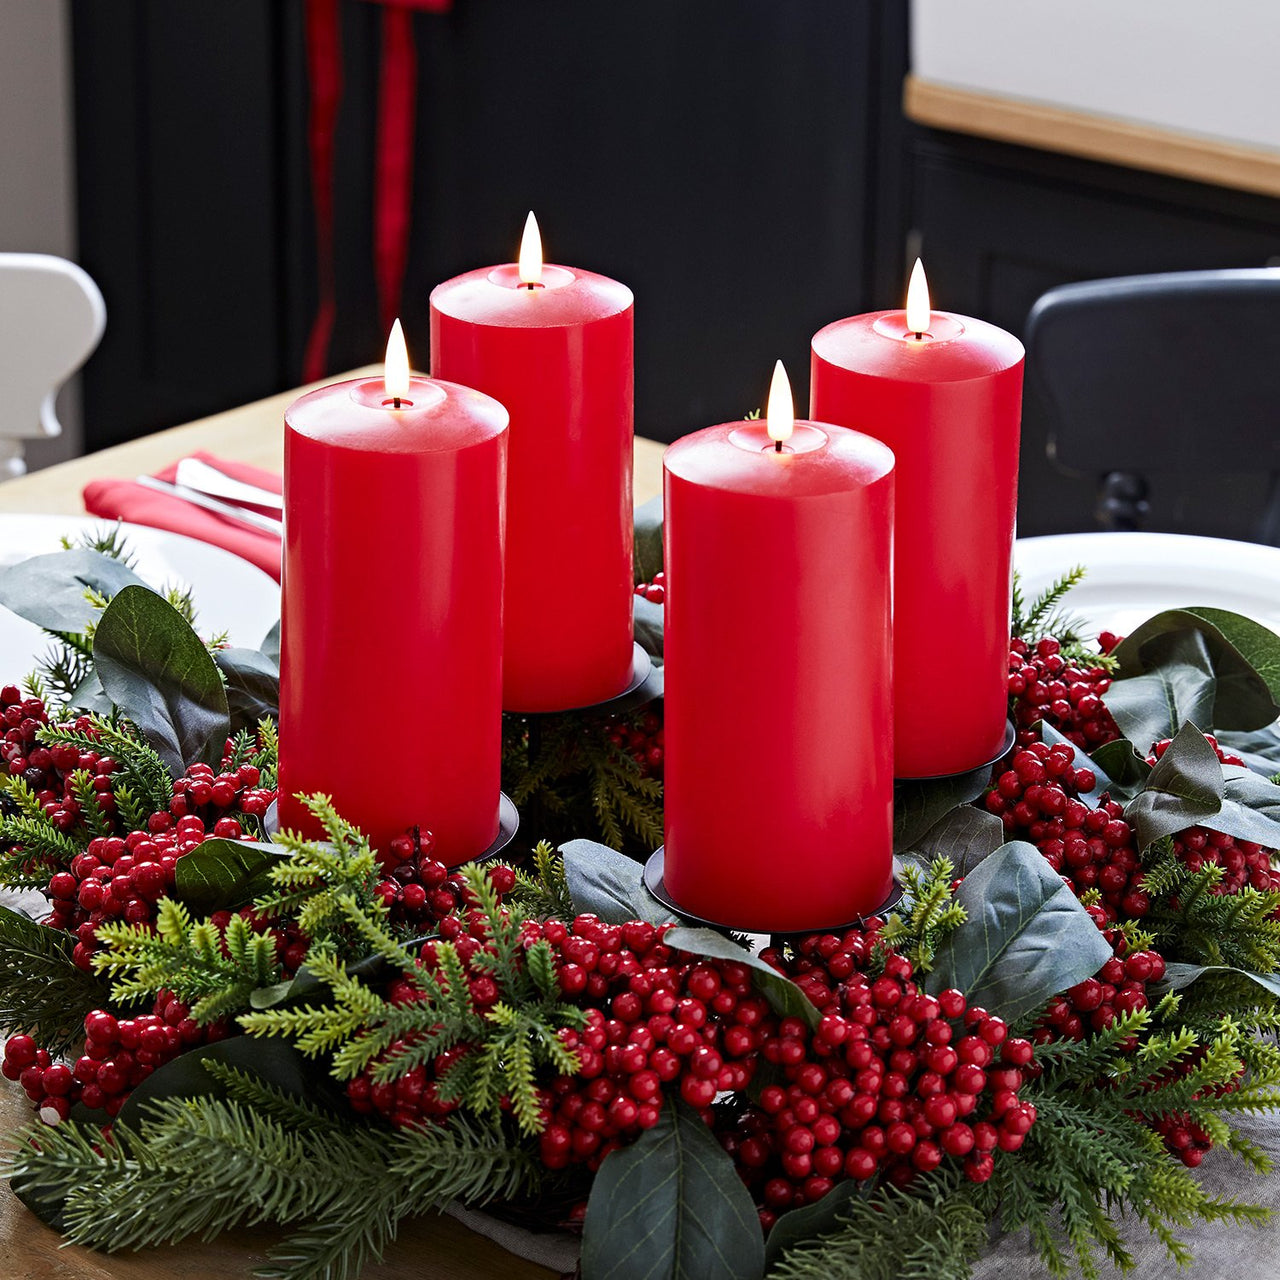 50cm Adventskranz mit roten Beeren inkl. Kerzenhalter und 4er Set TruGlow® rote LED Kerzen 15cm